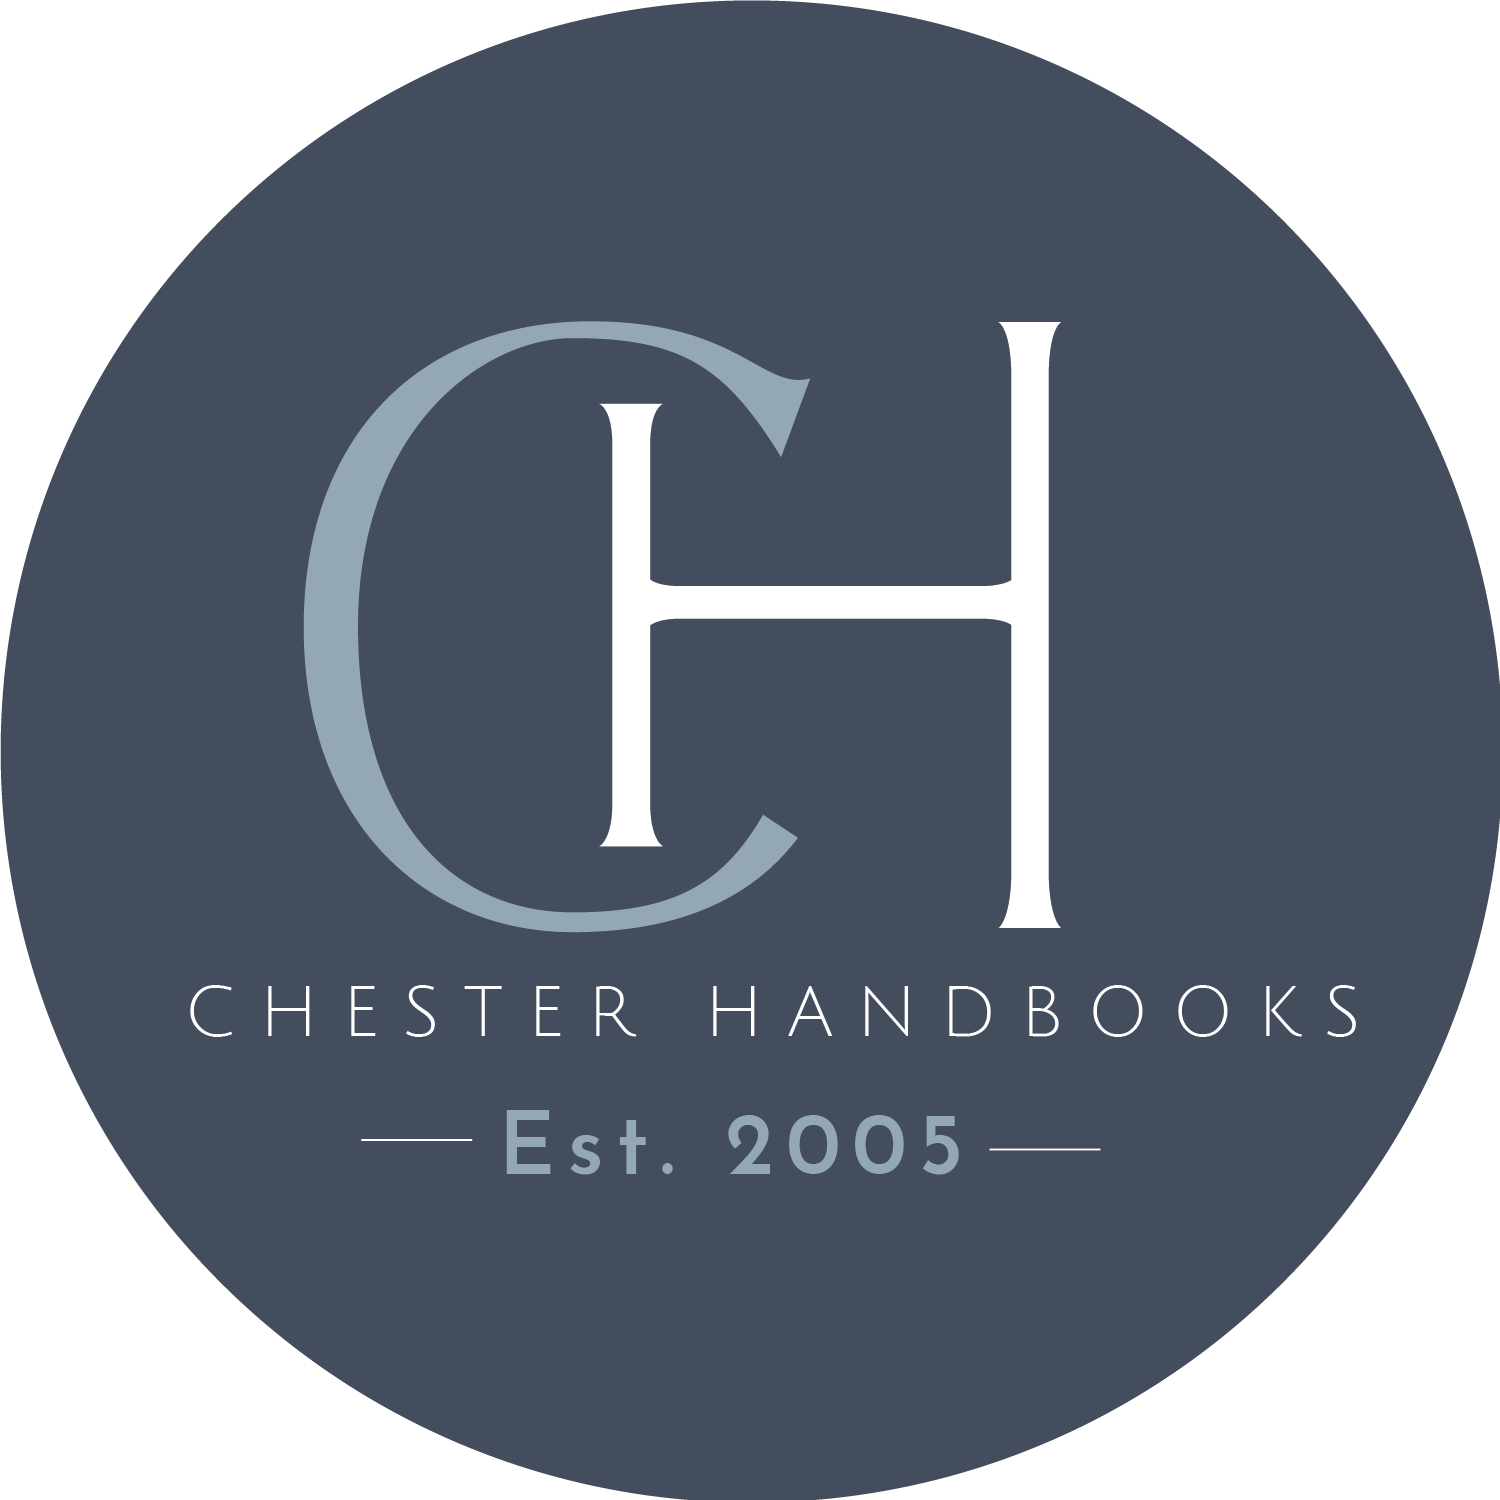 Chester Handbooks